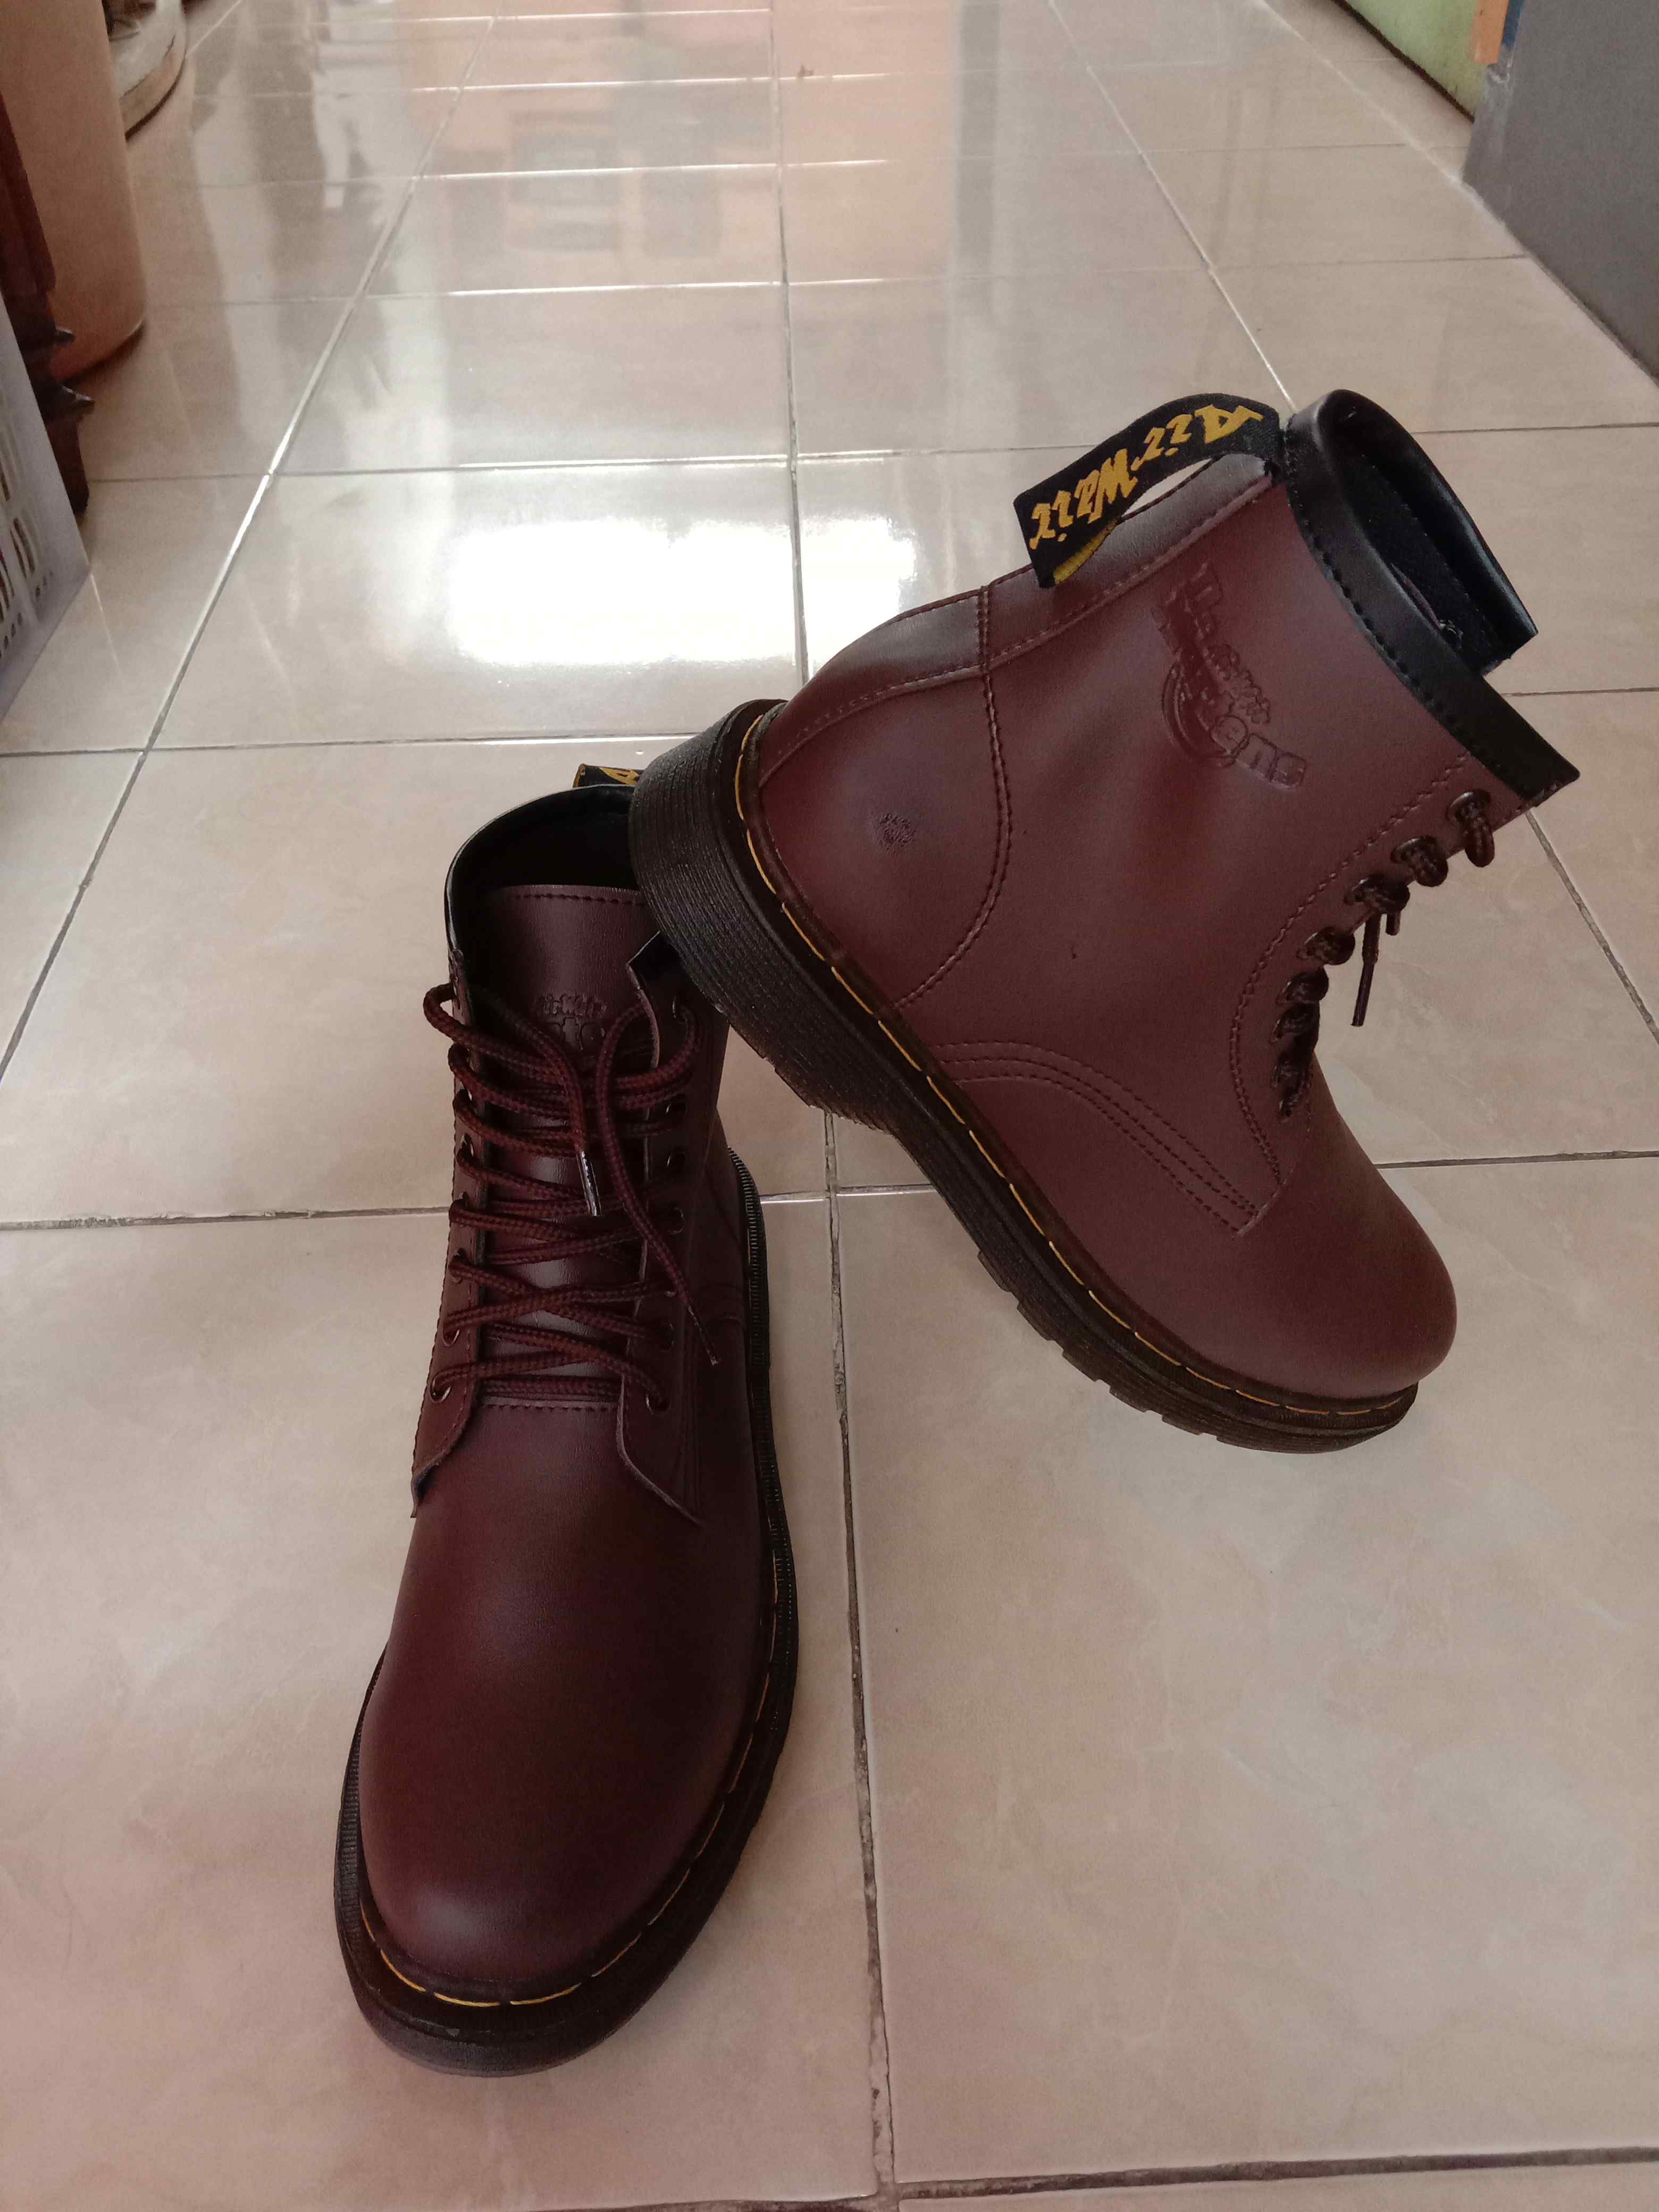 Sepatu boots pria Dr. Martens Docmart HIGH boots murah maroon casual